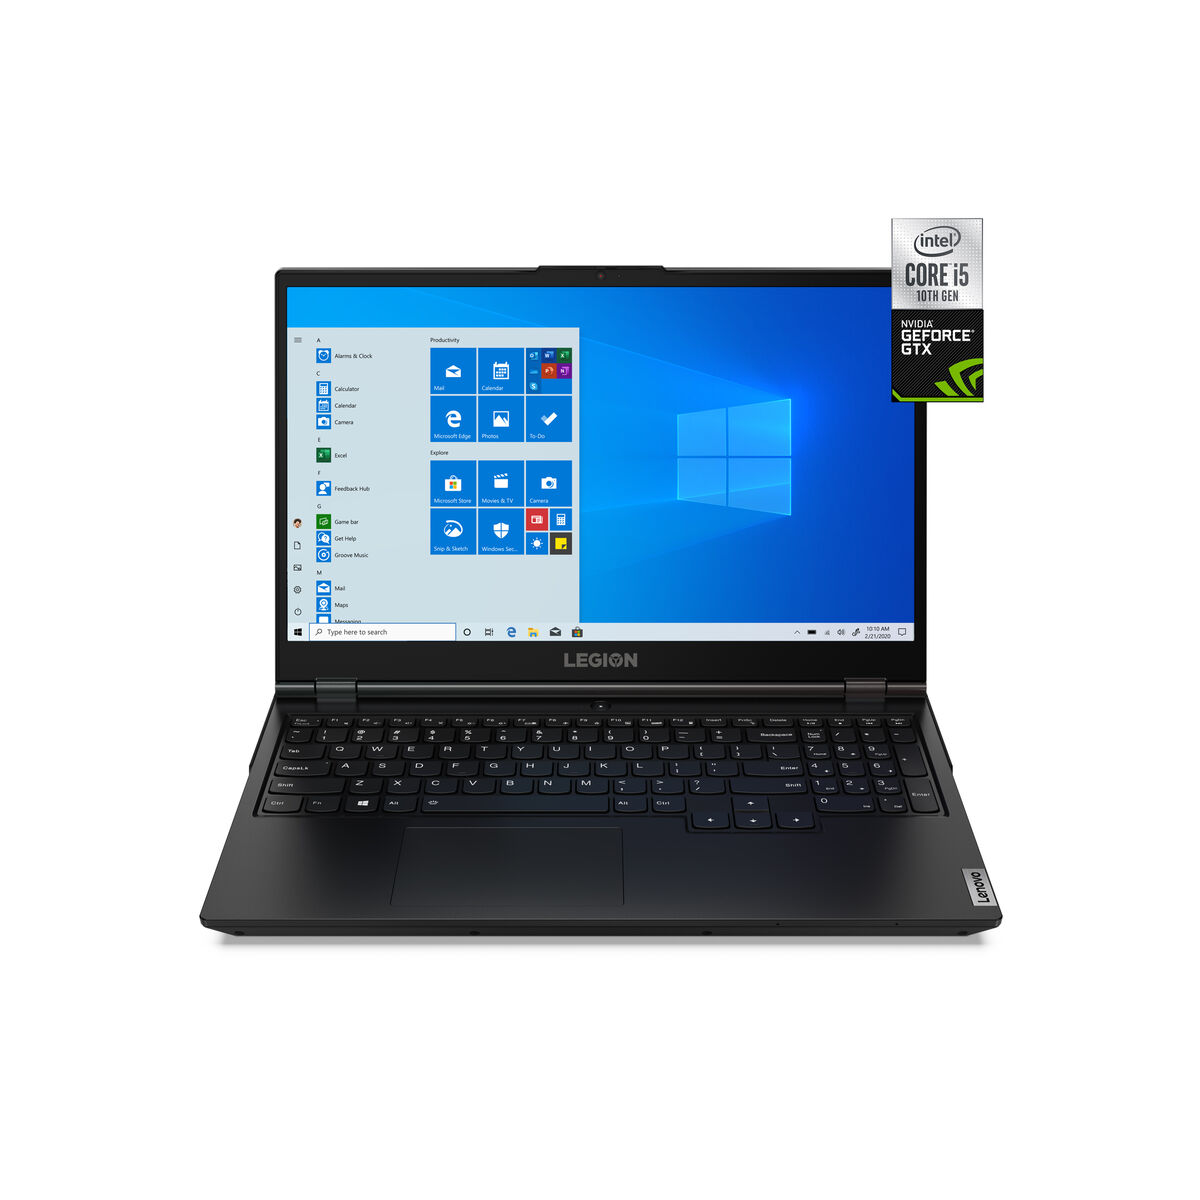 Notebook Gamer Lenovo Legion 5i Core i5-10300H 8GB 1TB+128GB SSD 15.6" NVIDIA GTX1660Ti 6GB